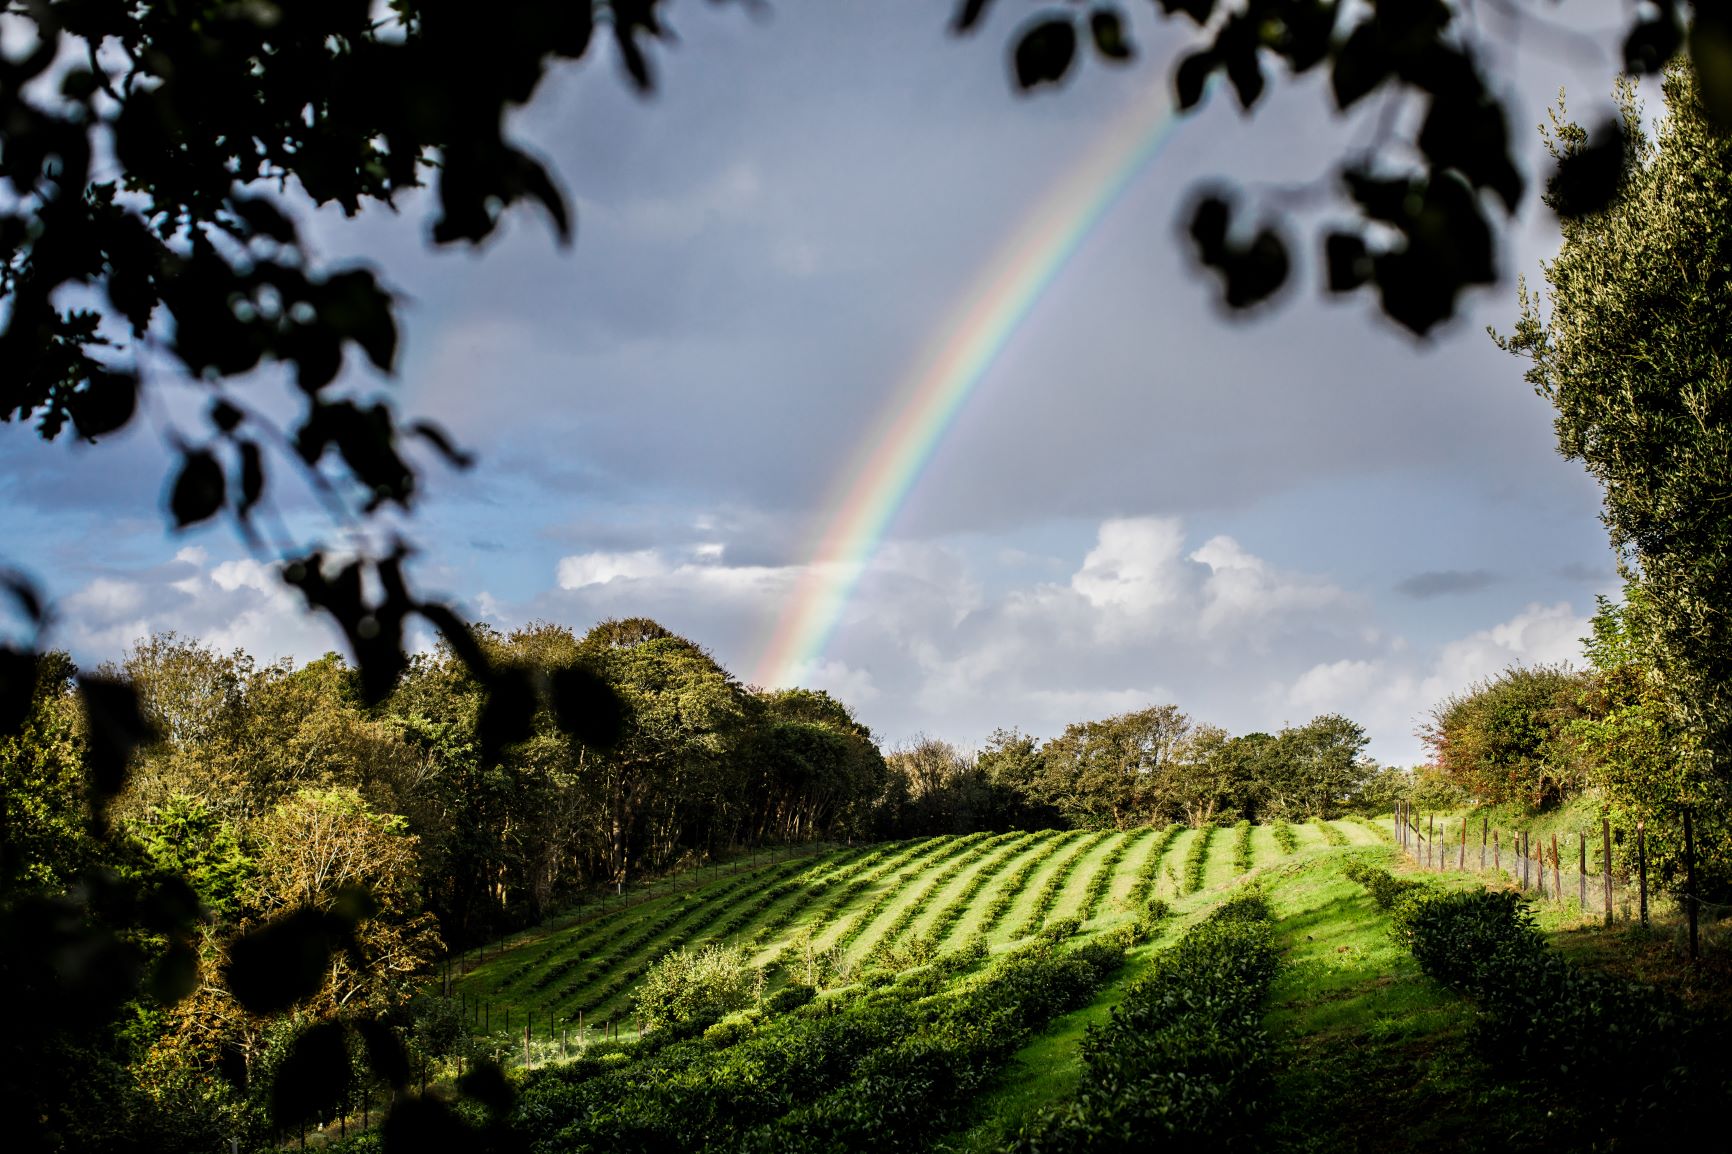 Tea garden in the United Kingdom with rainbow